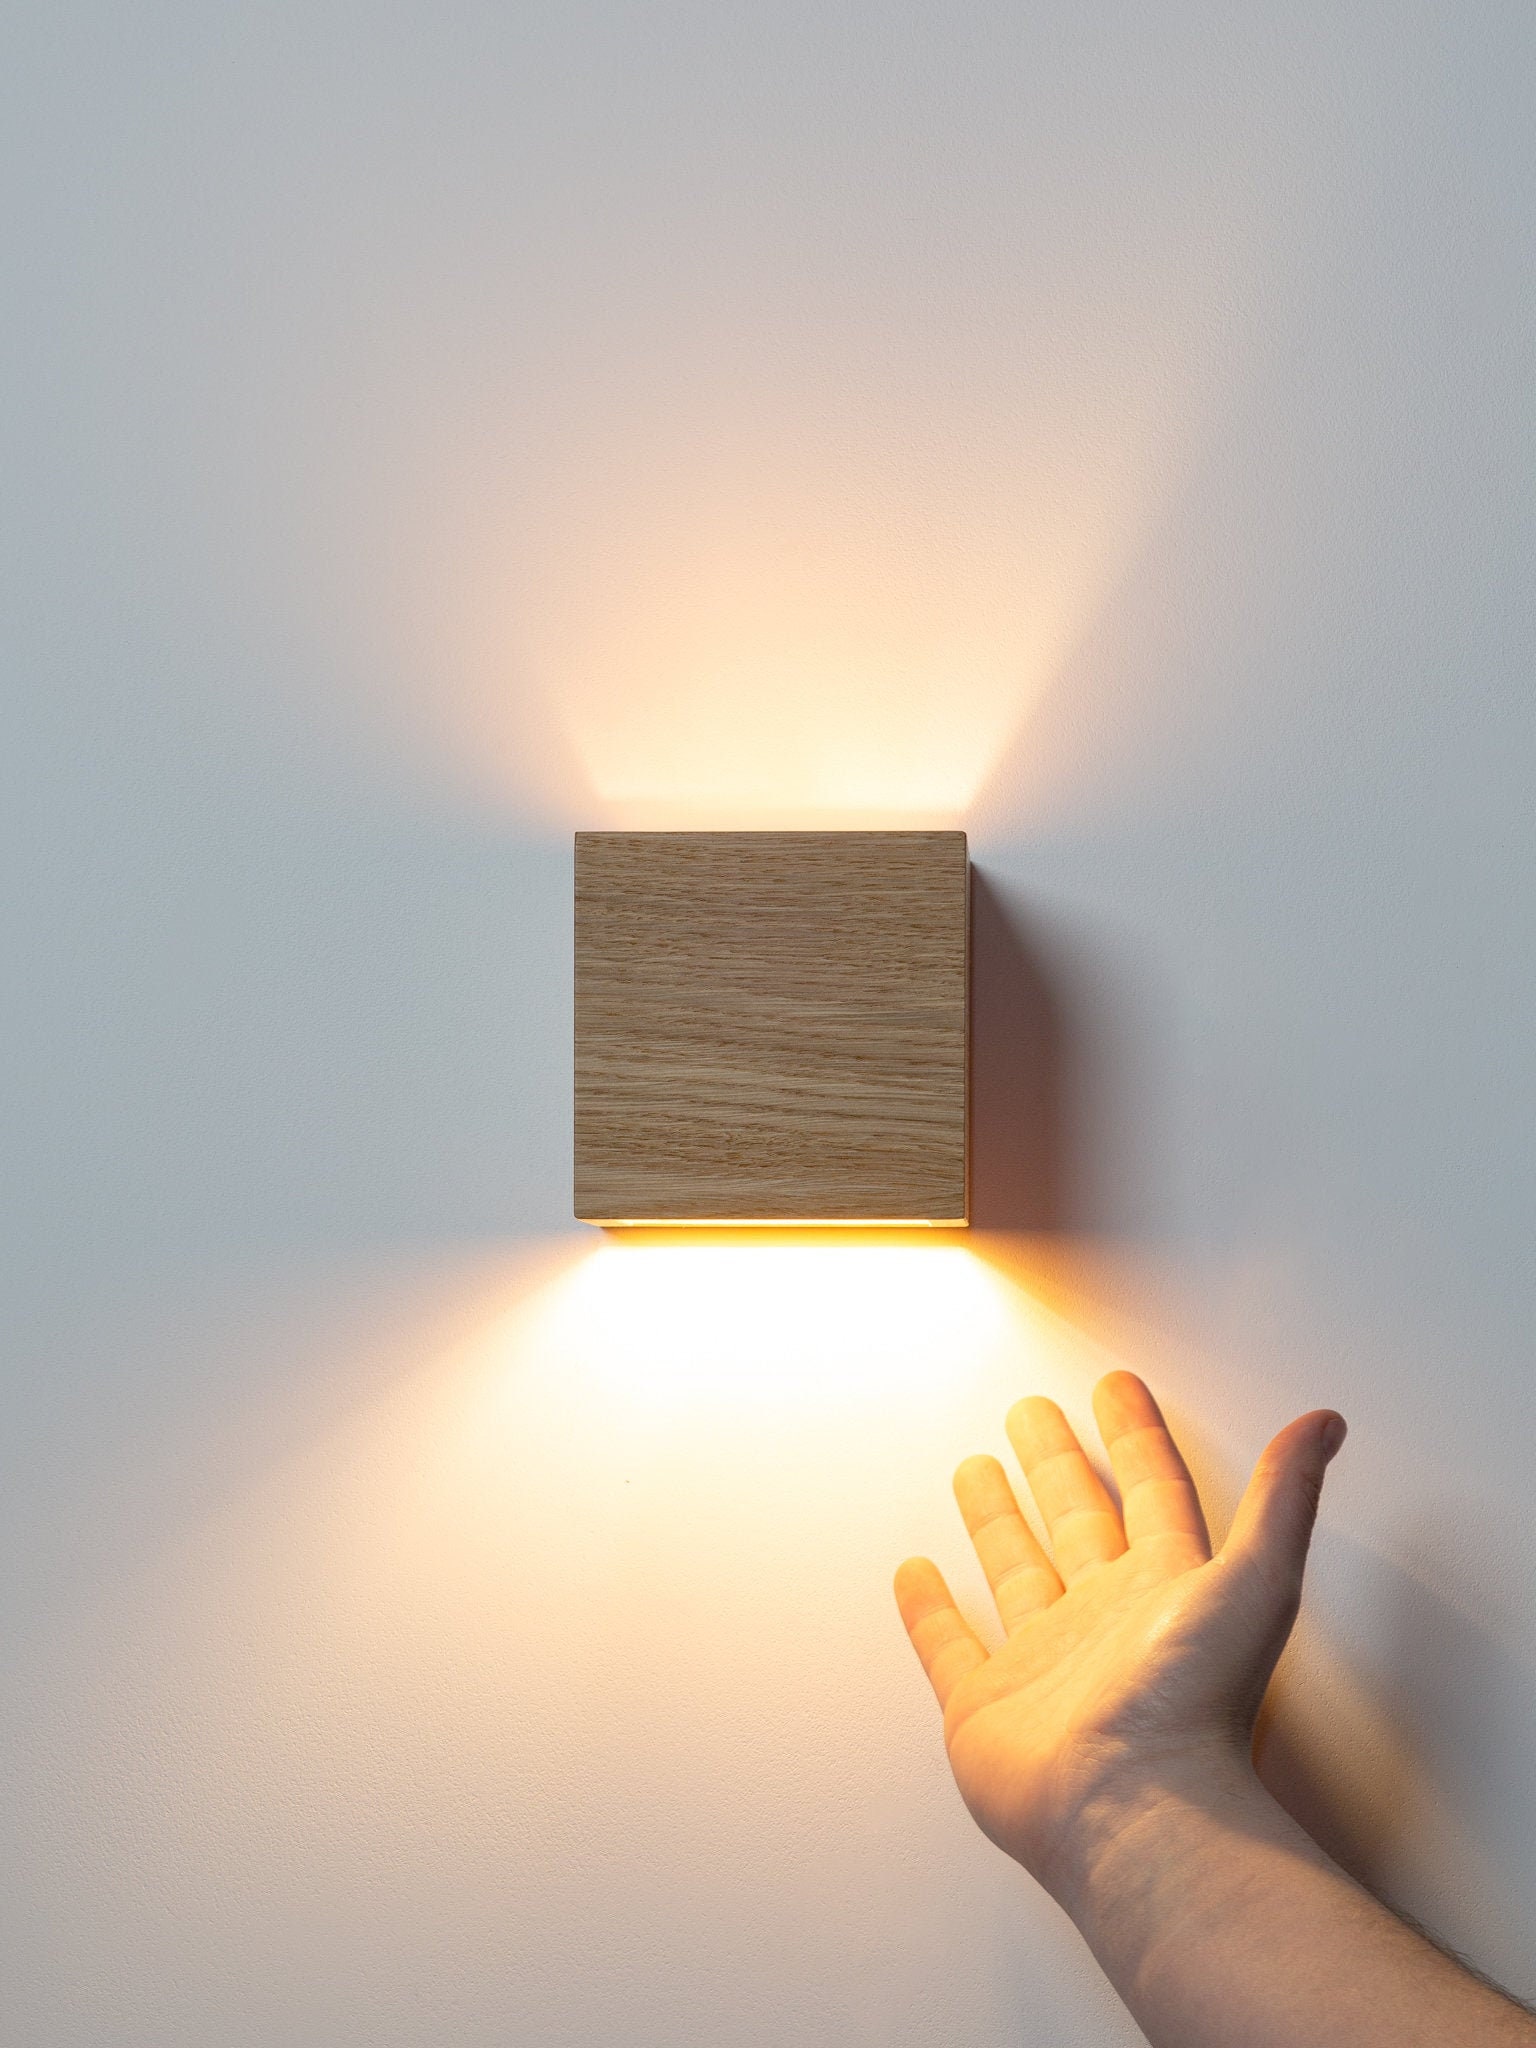 exklusive QUBIQ Wandleuchte handgefertigte Holz Wohnkultur Leuchter Lampe hochwertige